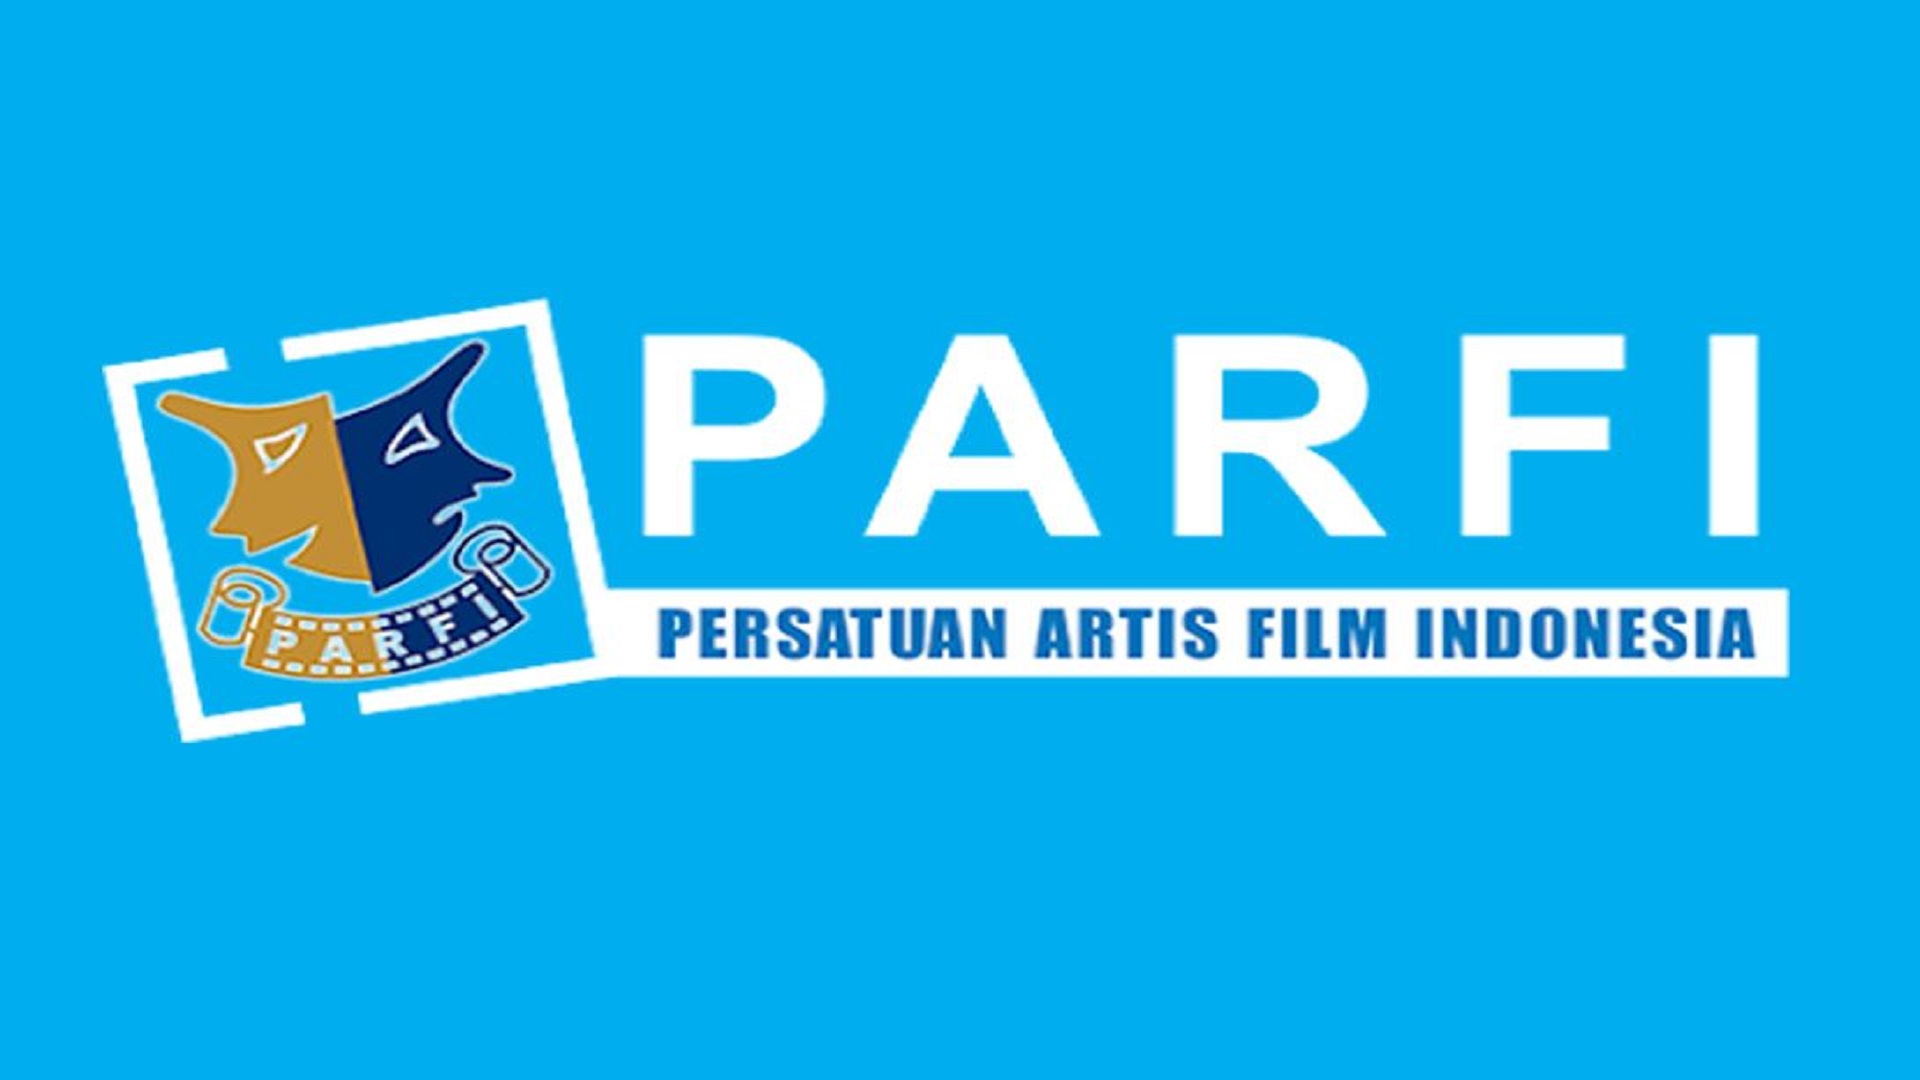 Selamat Hari Persatuan Artis Film Indonesia (PARFI)